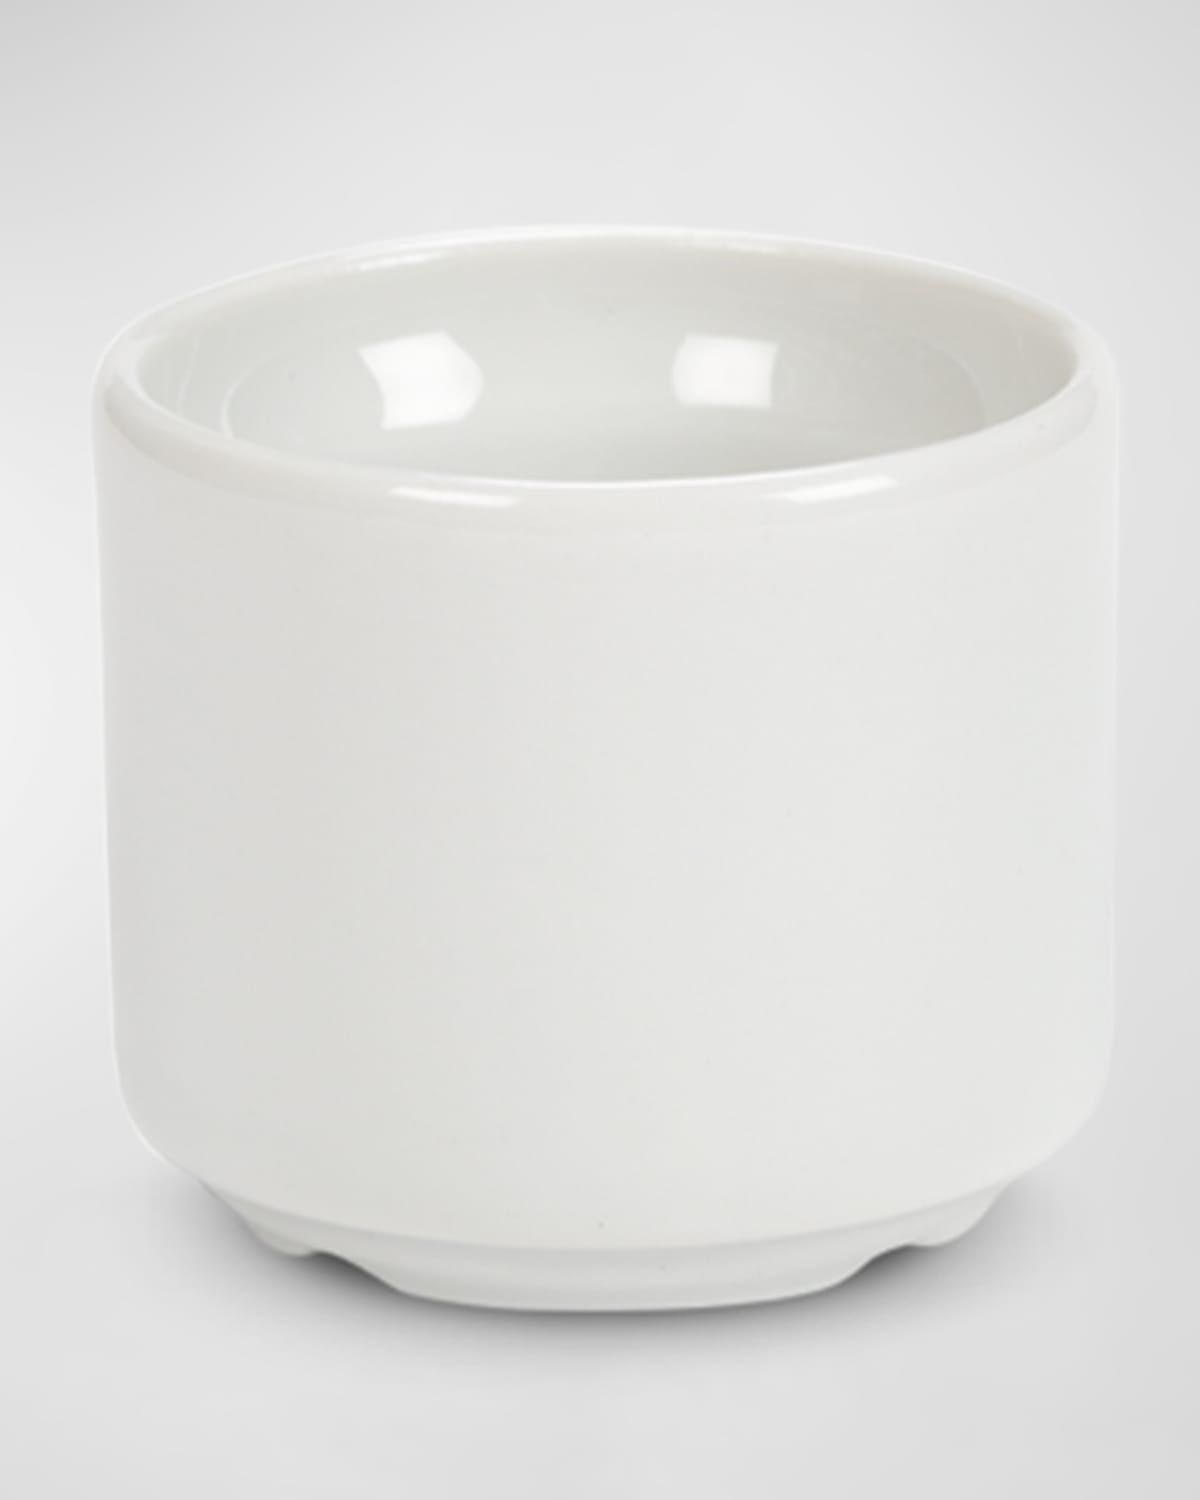 Pillivuyt European Style Egg Cup, Set Of 6 In White